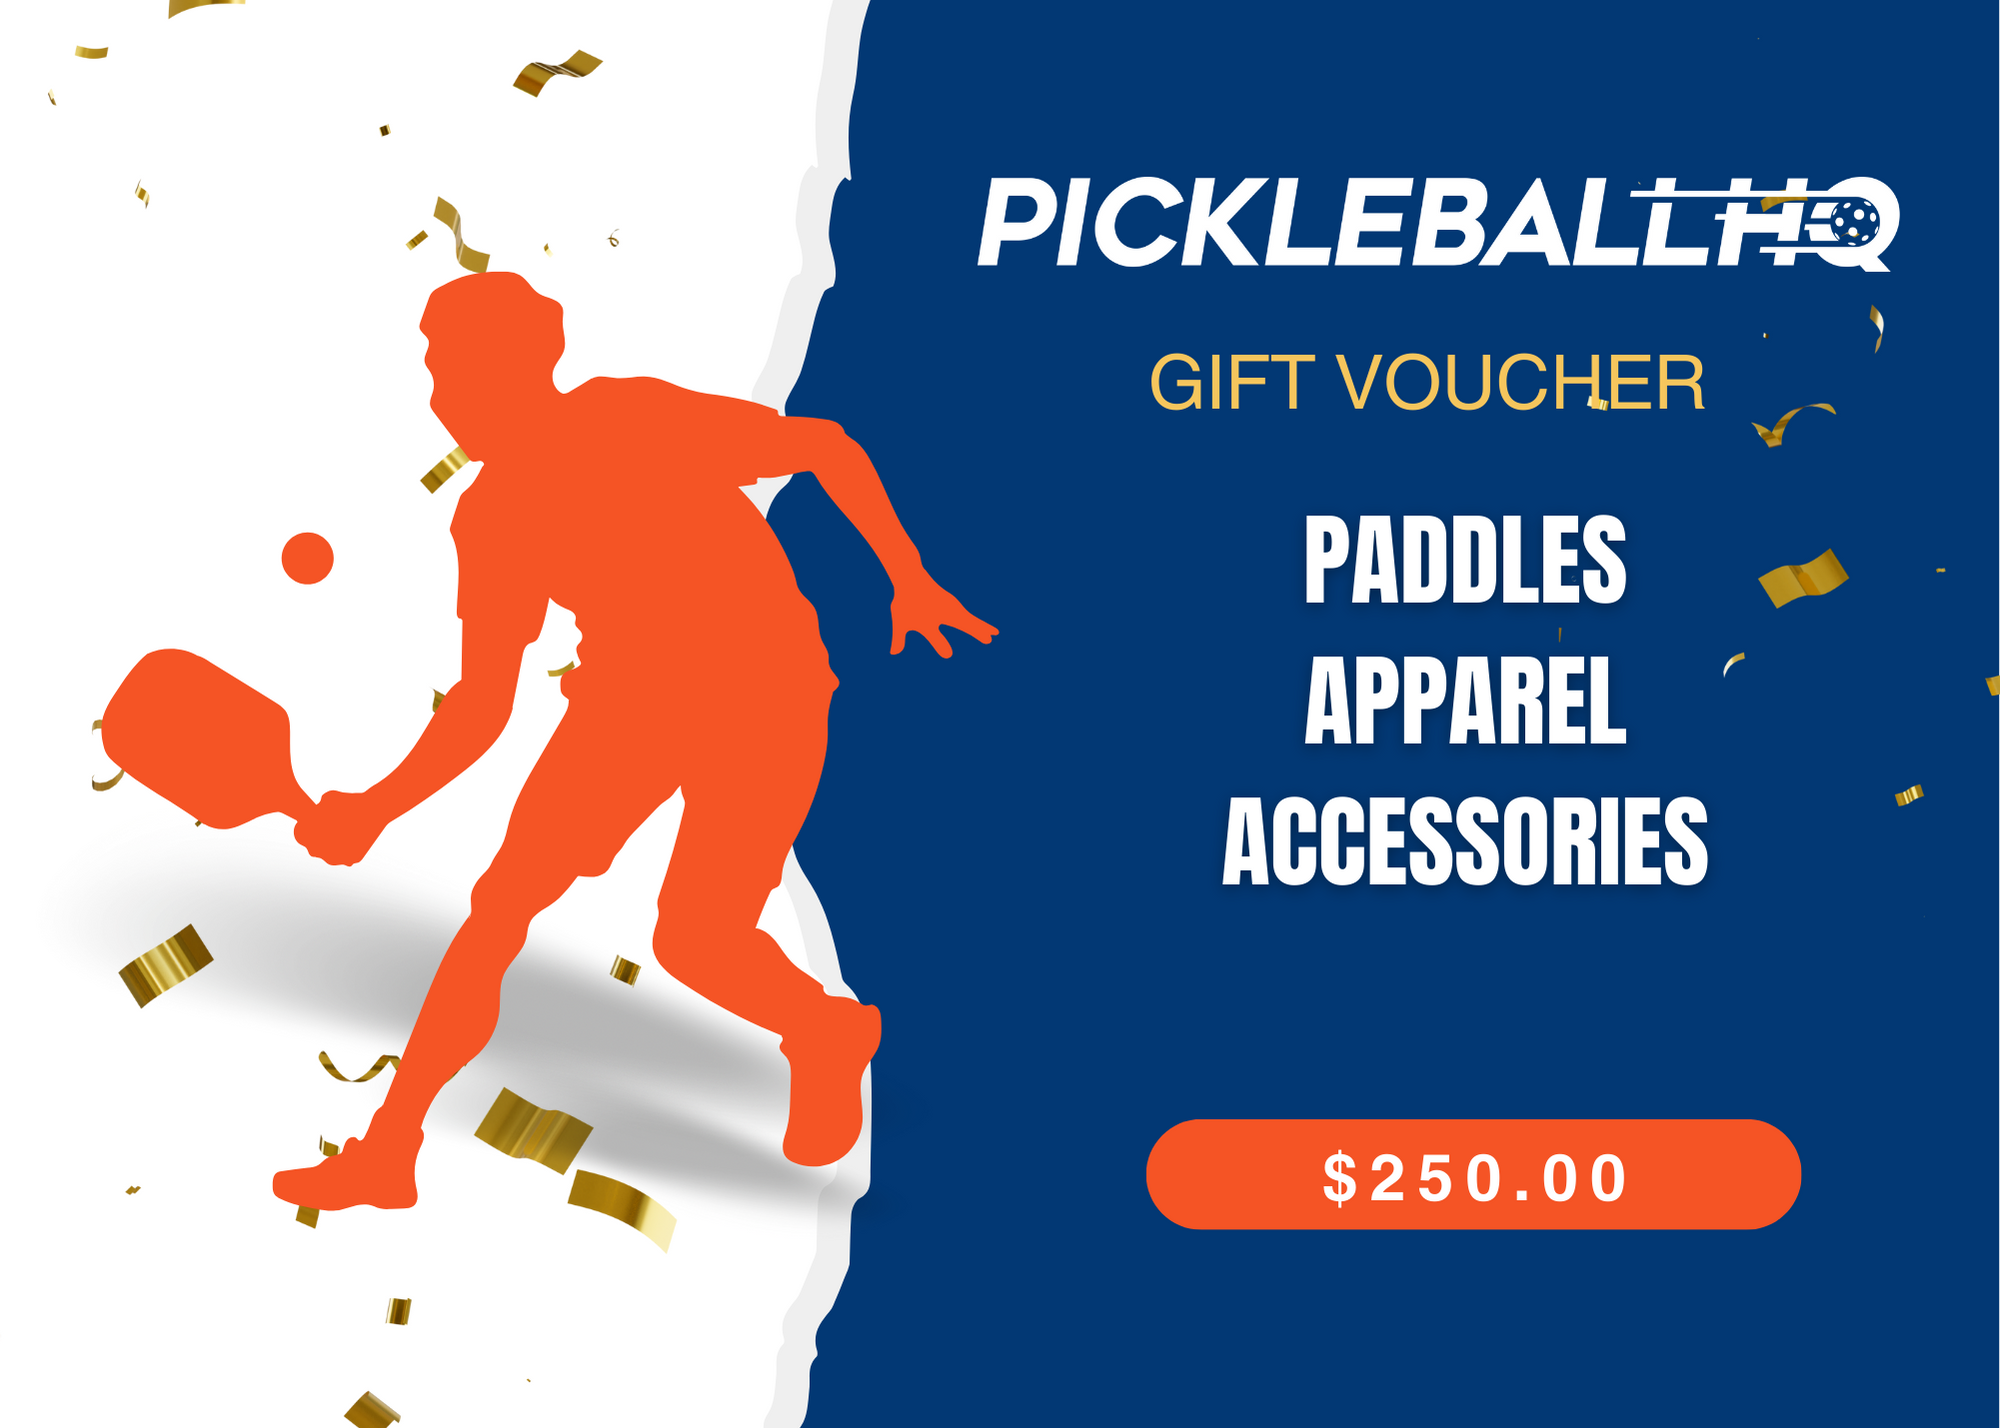 Pickleball HQ Gift Voucher $250